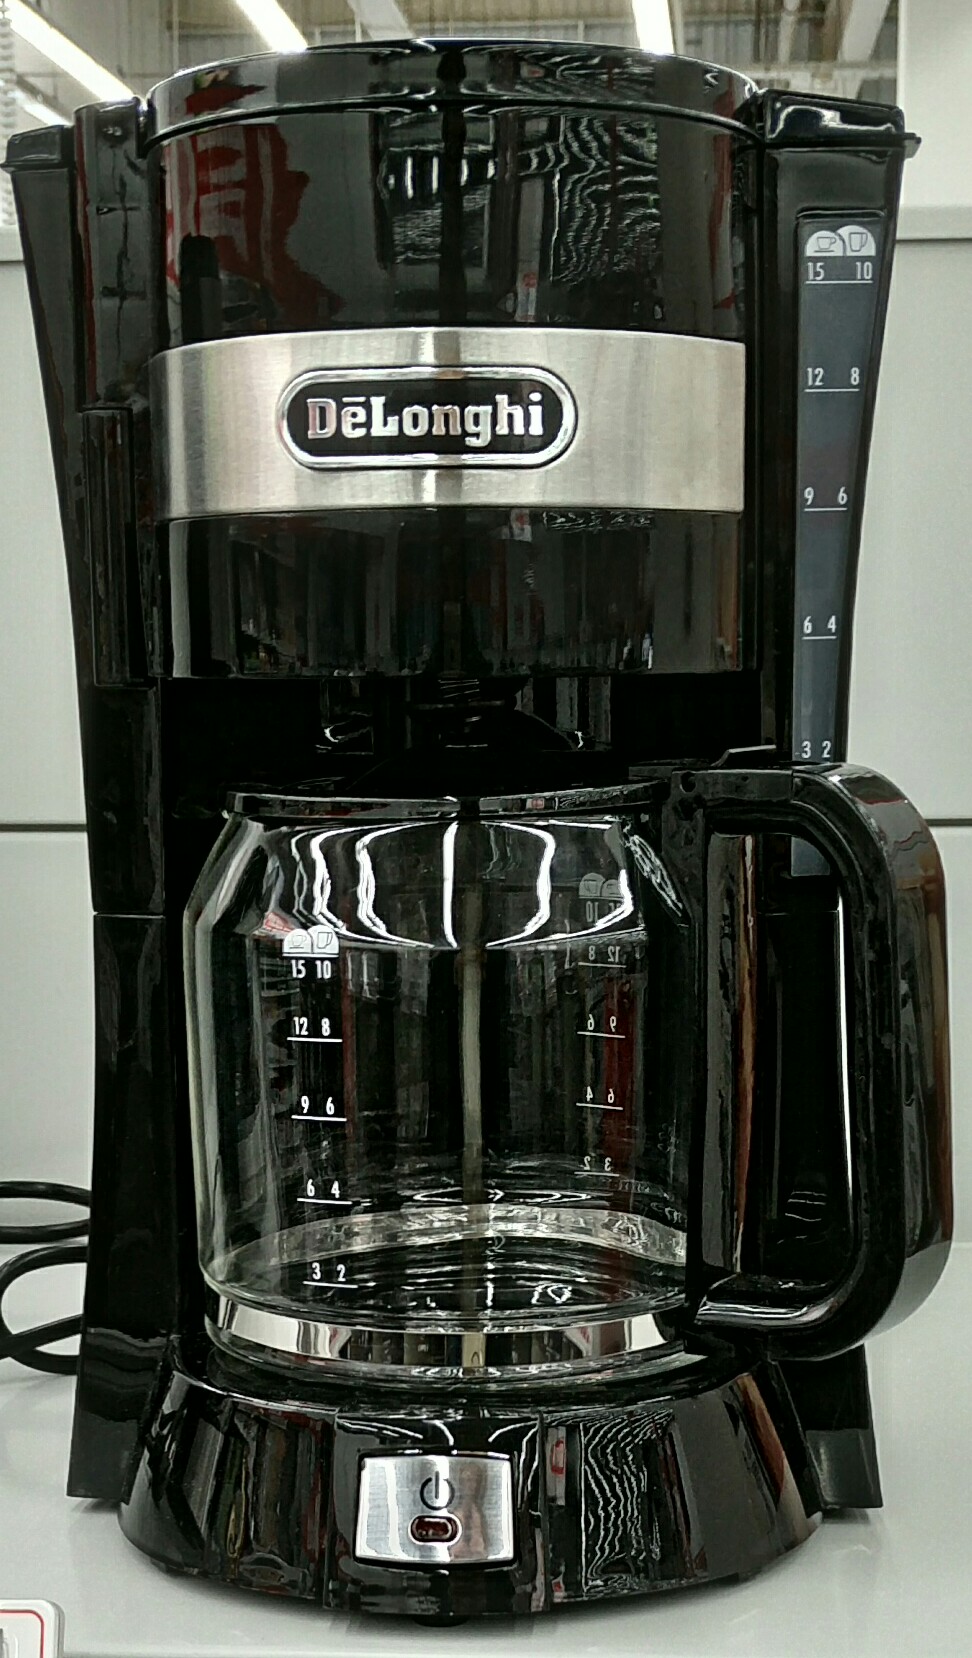 Coffeemaker - Wikipedia